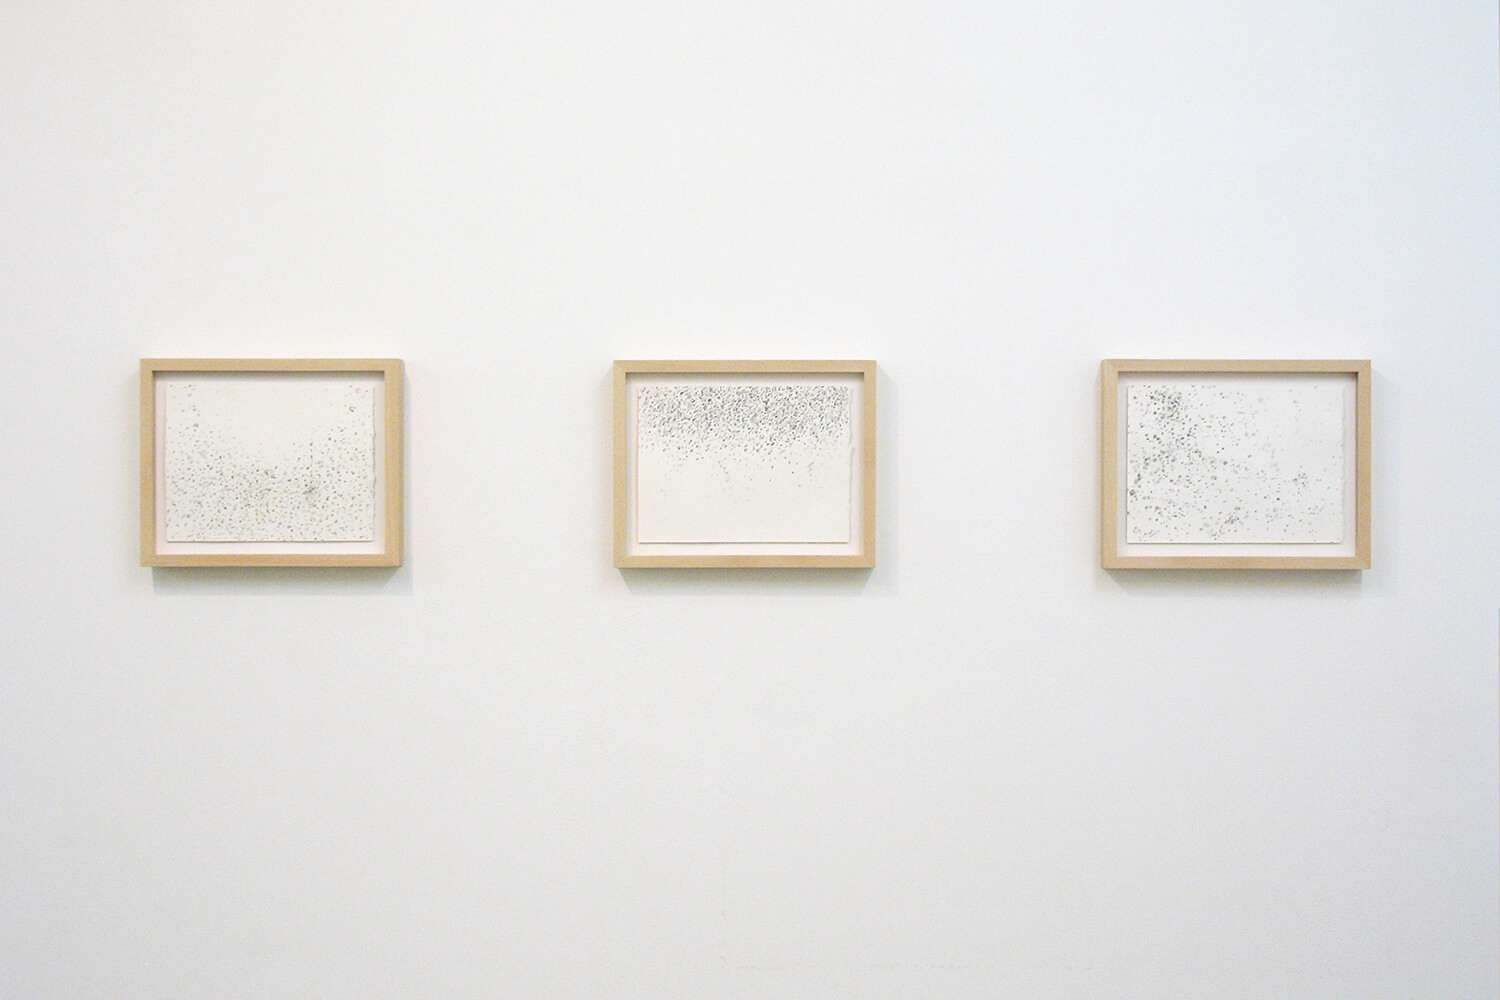 When the Dust Settles<br>encil on paper, 18.9 x 26 cm, 2010 (each)